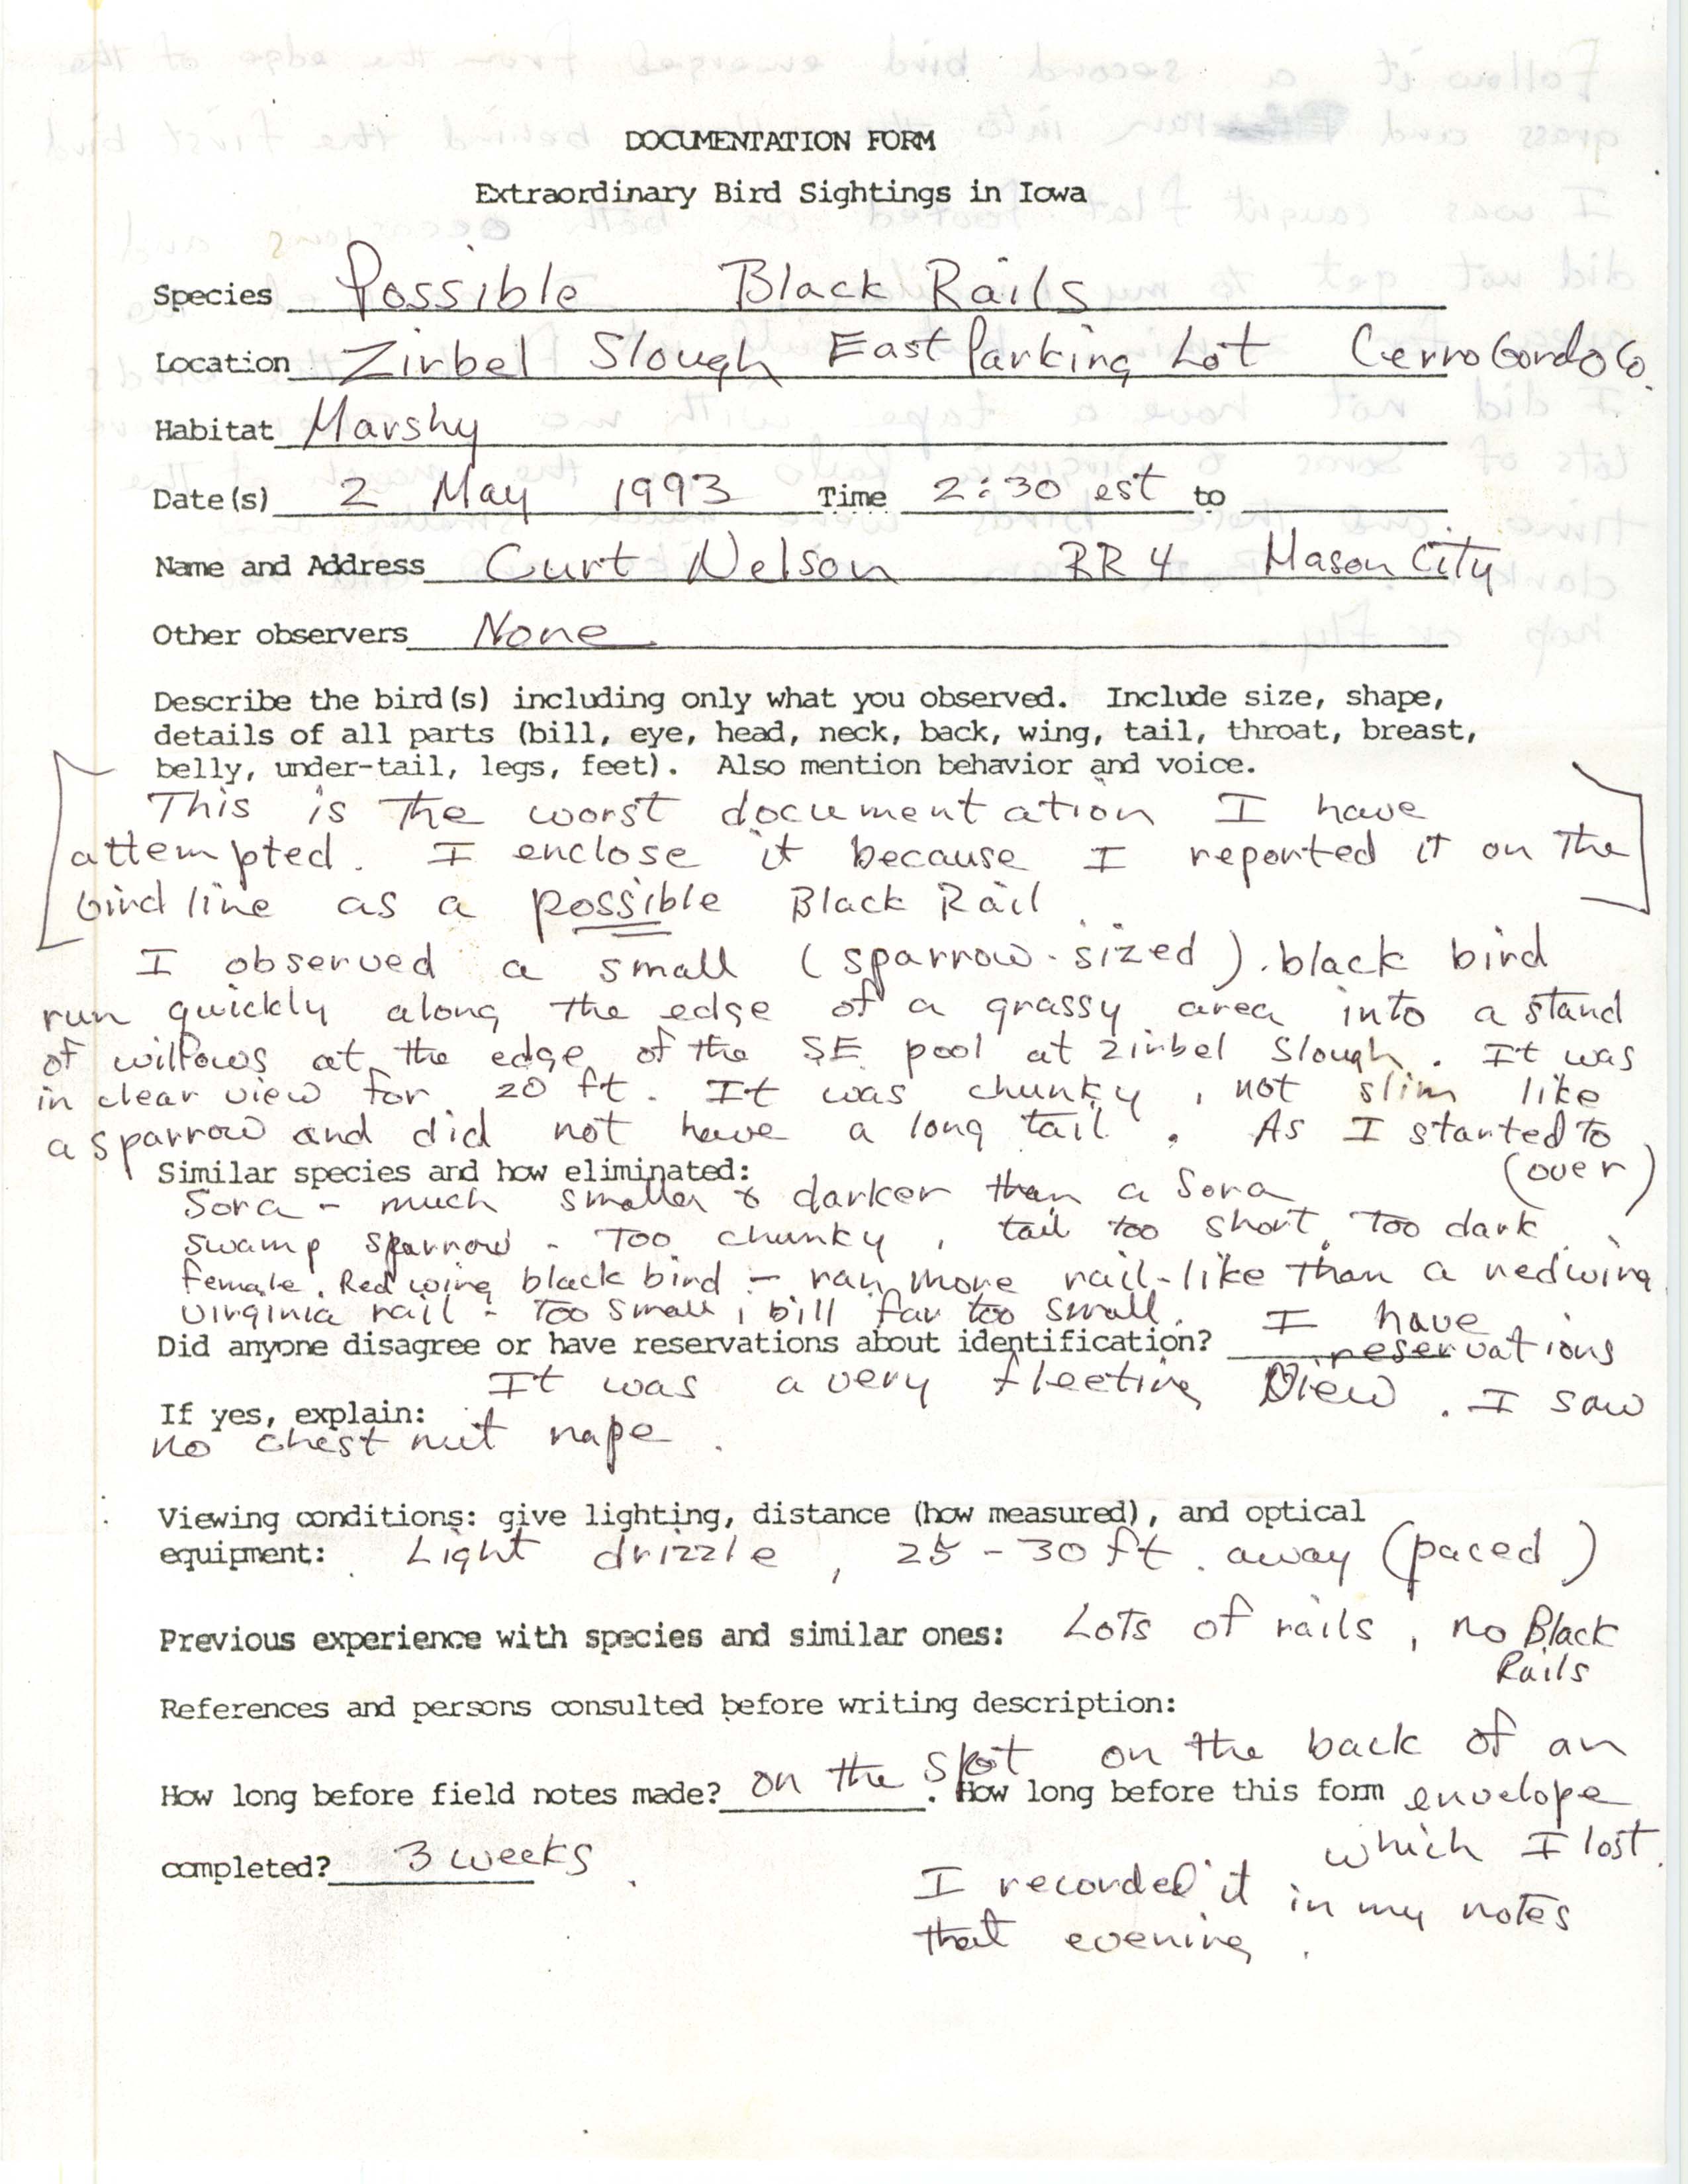 Rare bird documentation form for Black Rail at Zirbel Slough, 1993